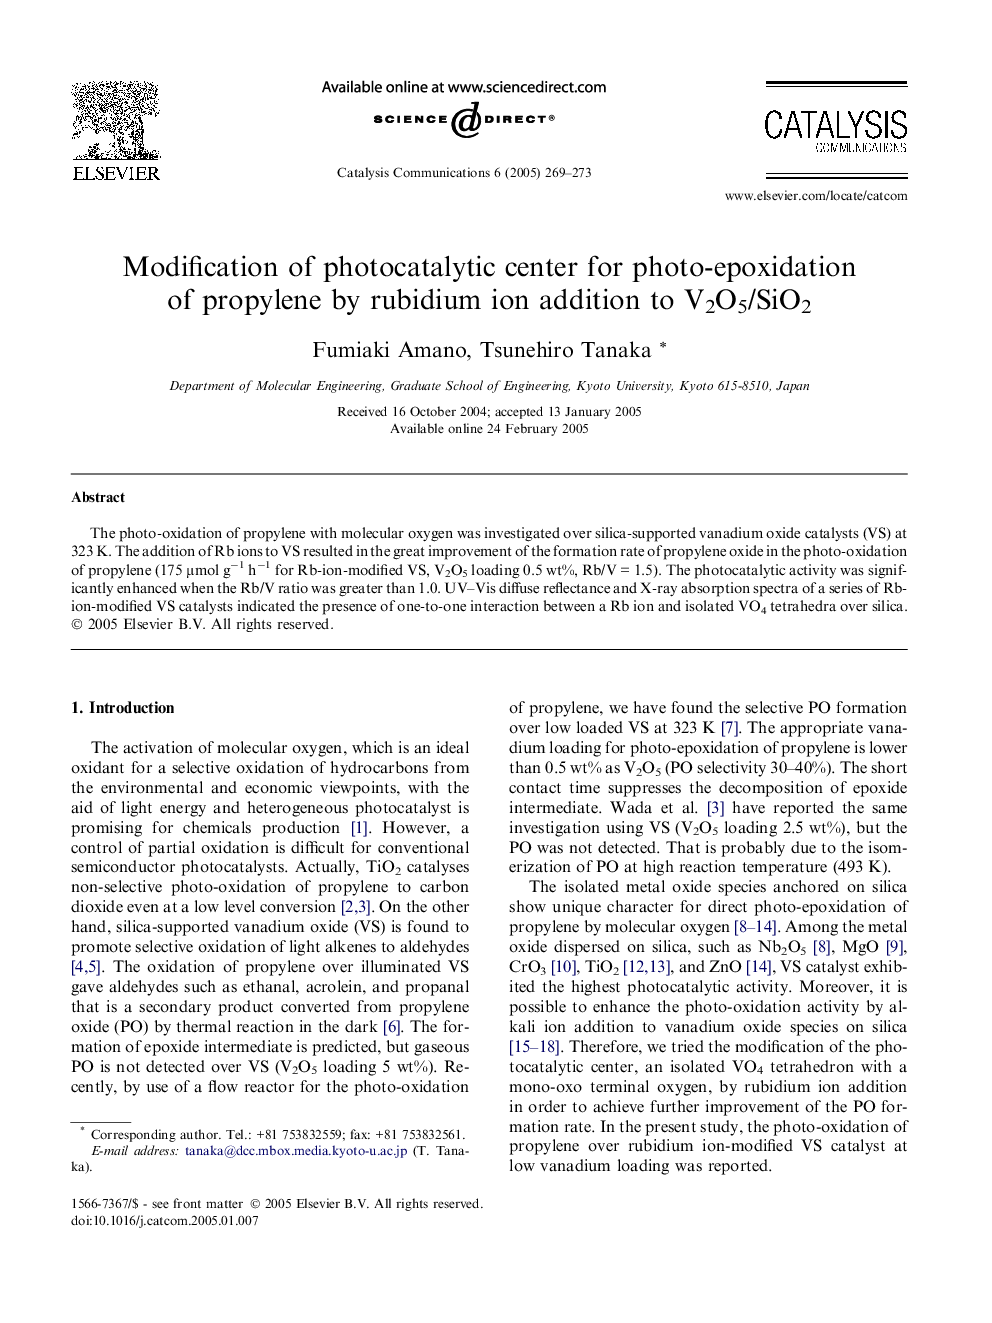 Modification of photocatalytic center for photo-epoxidation of propylene by rubidium ion addition to V2O5/SiO2